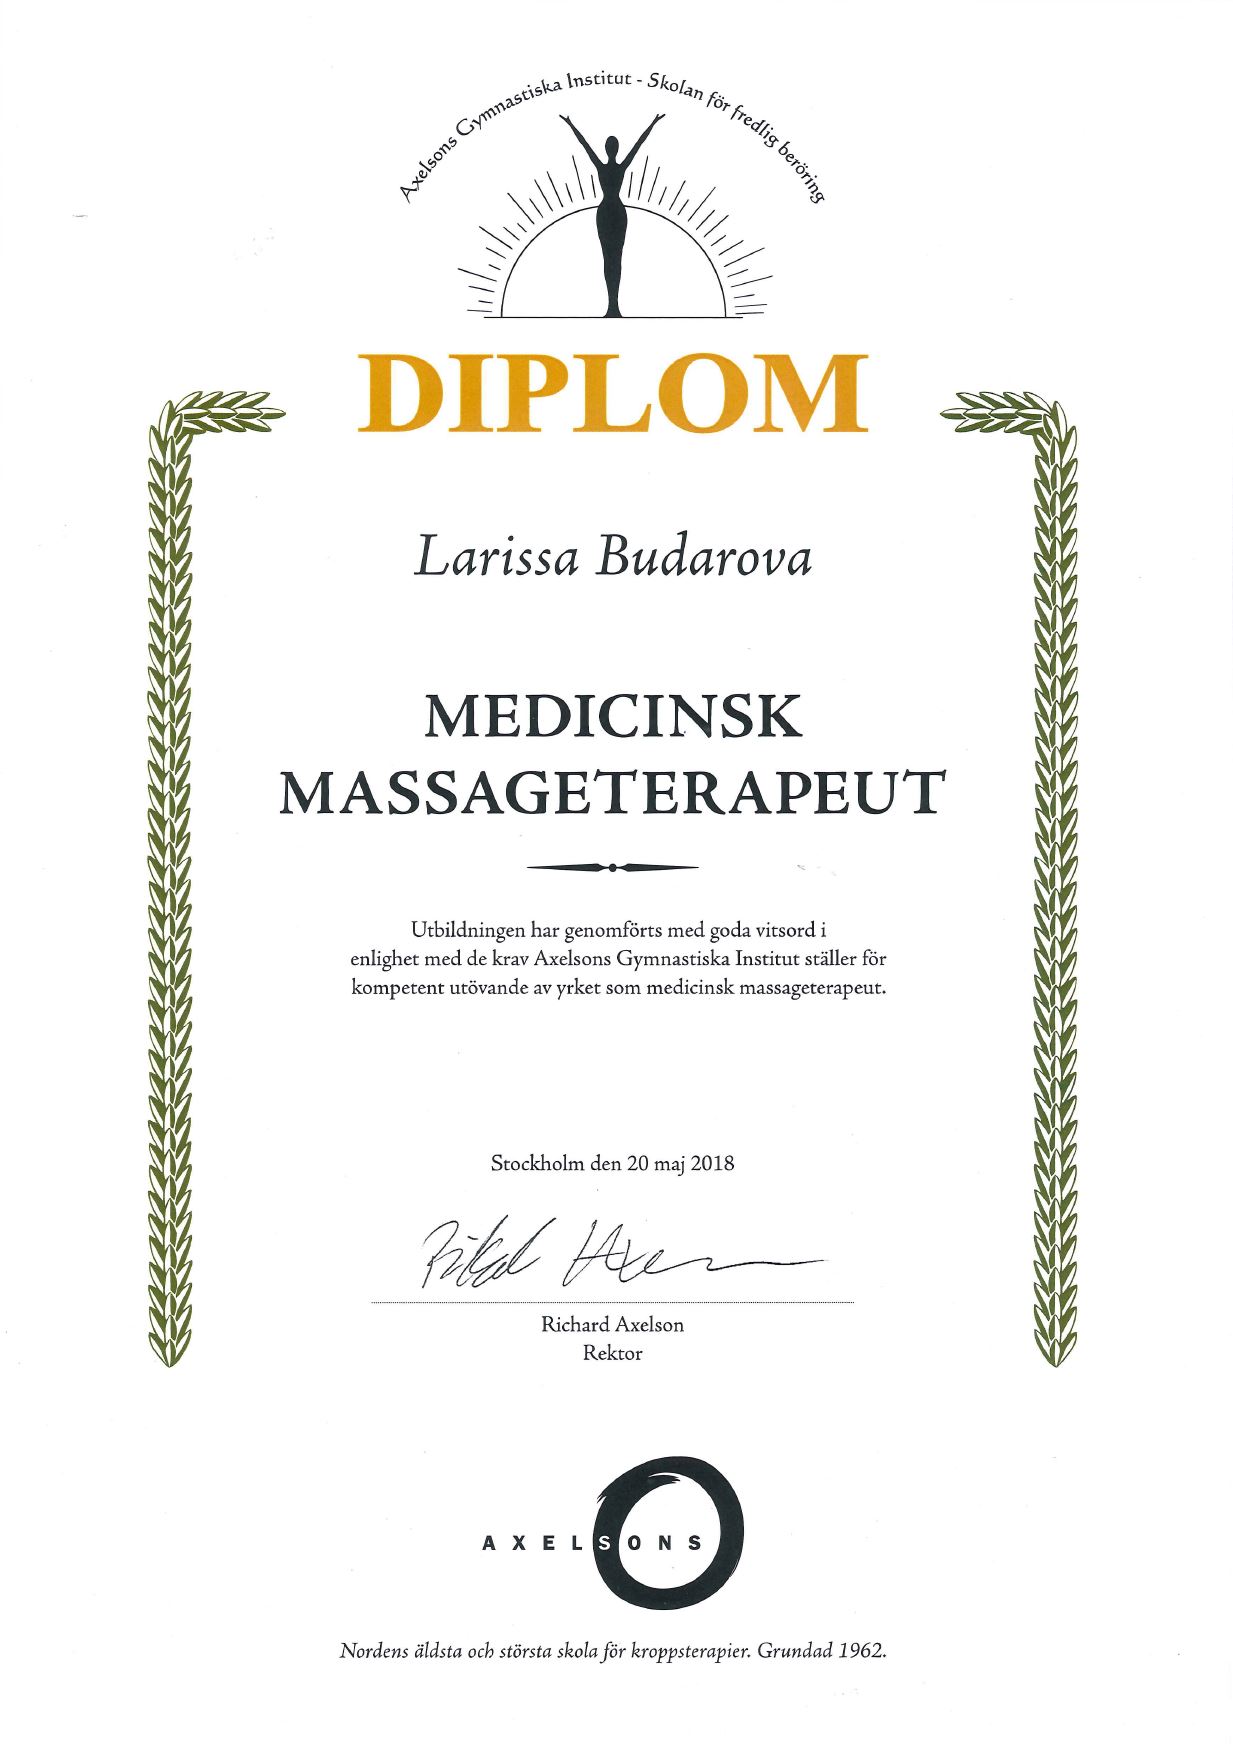 Certified Medicinal Massage Therapist - Axelsons Gymnastiska Institut